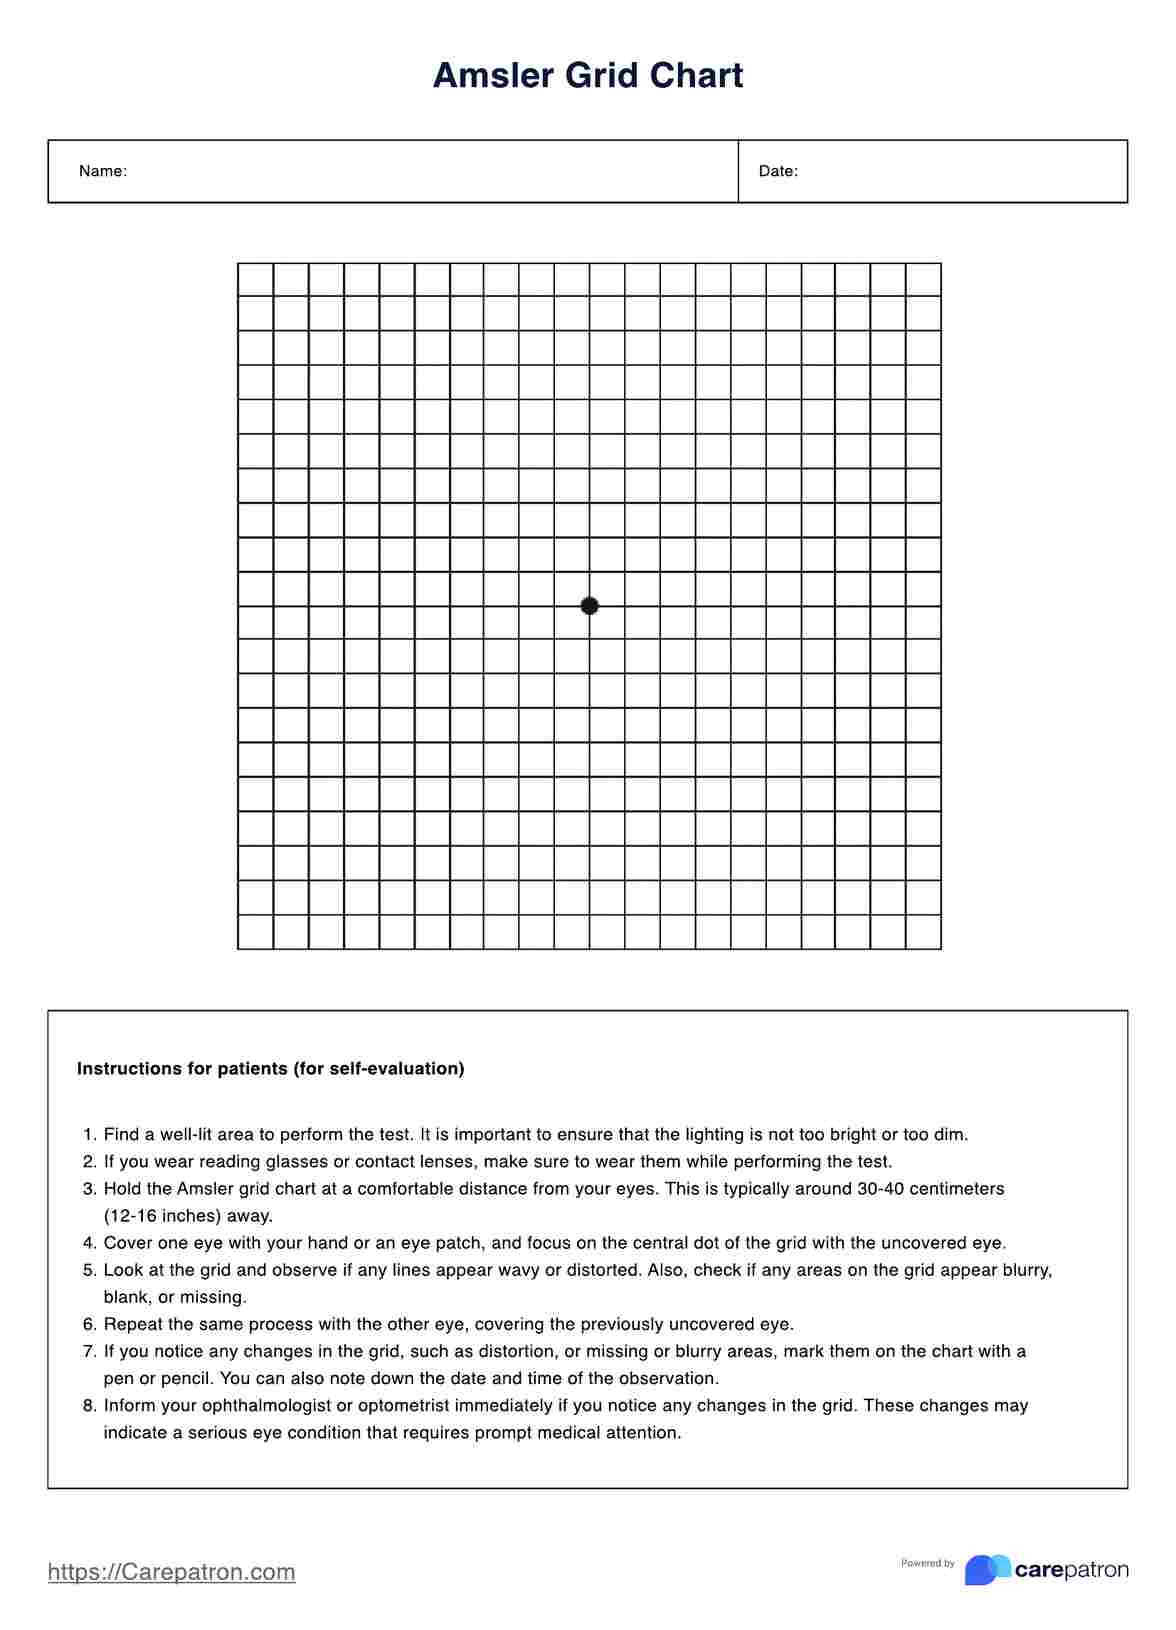 Amsler Grid Chart PDF Example